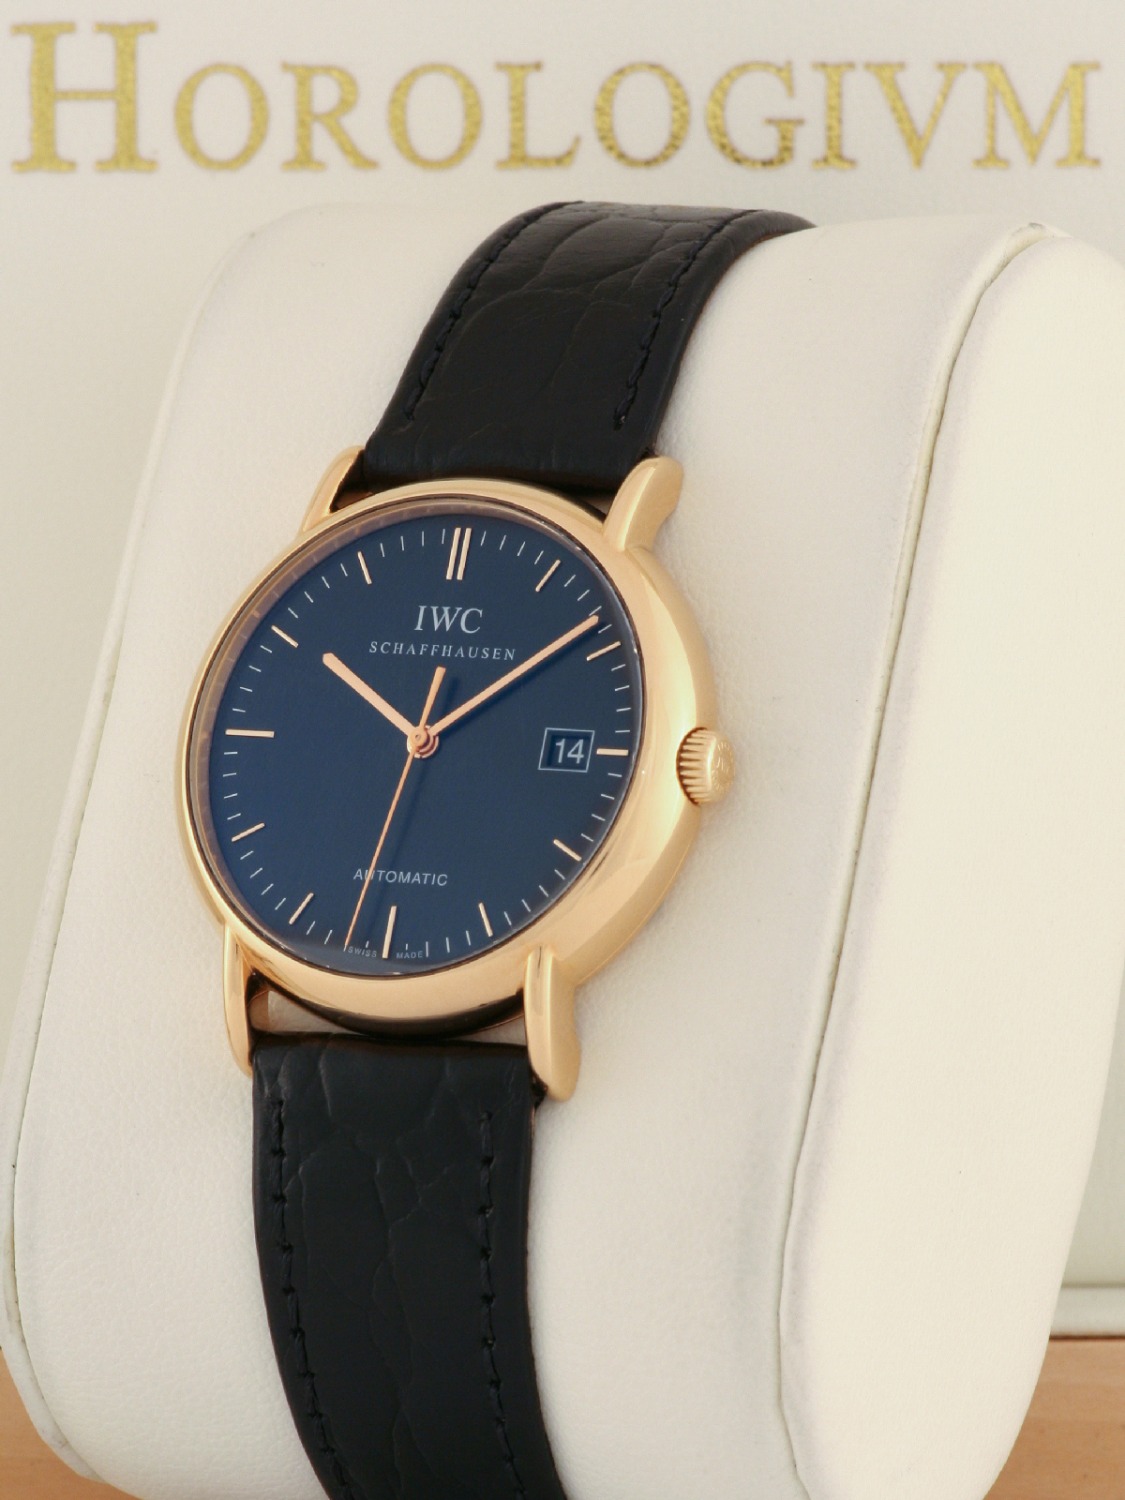 IWC Portofino Automatic watch, rose gold